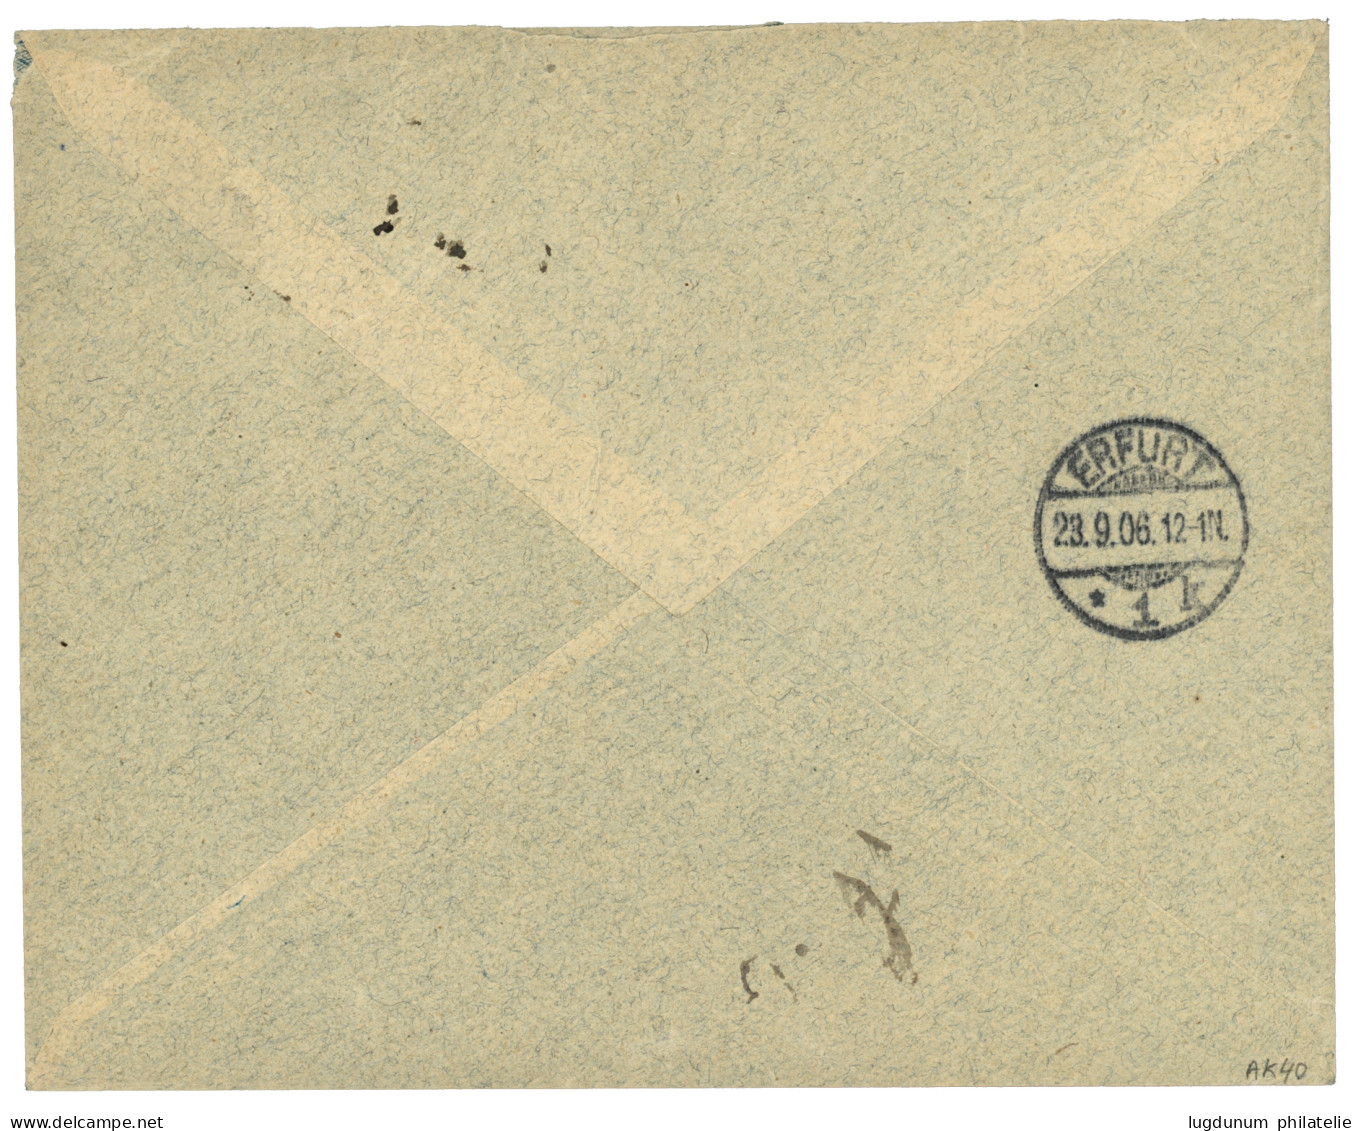 PALESTINE German P.O. : 1906 25P On 5 MARK (michel 47a) Canc. JAFFA + Boxed AUS RAMLCH PALÄSTINA On REGISTERED Envelope  - Turkse Rijk (kantoren)